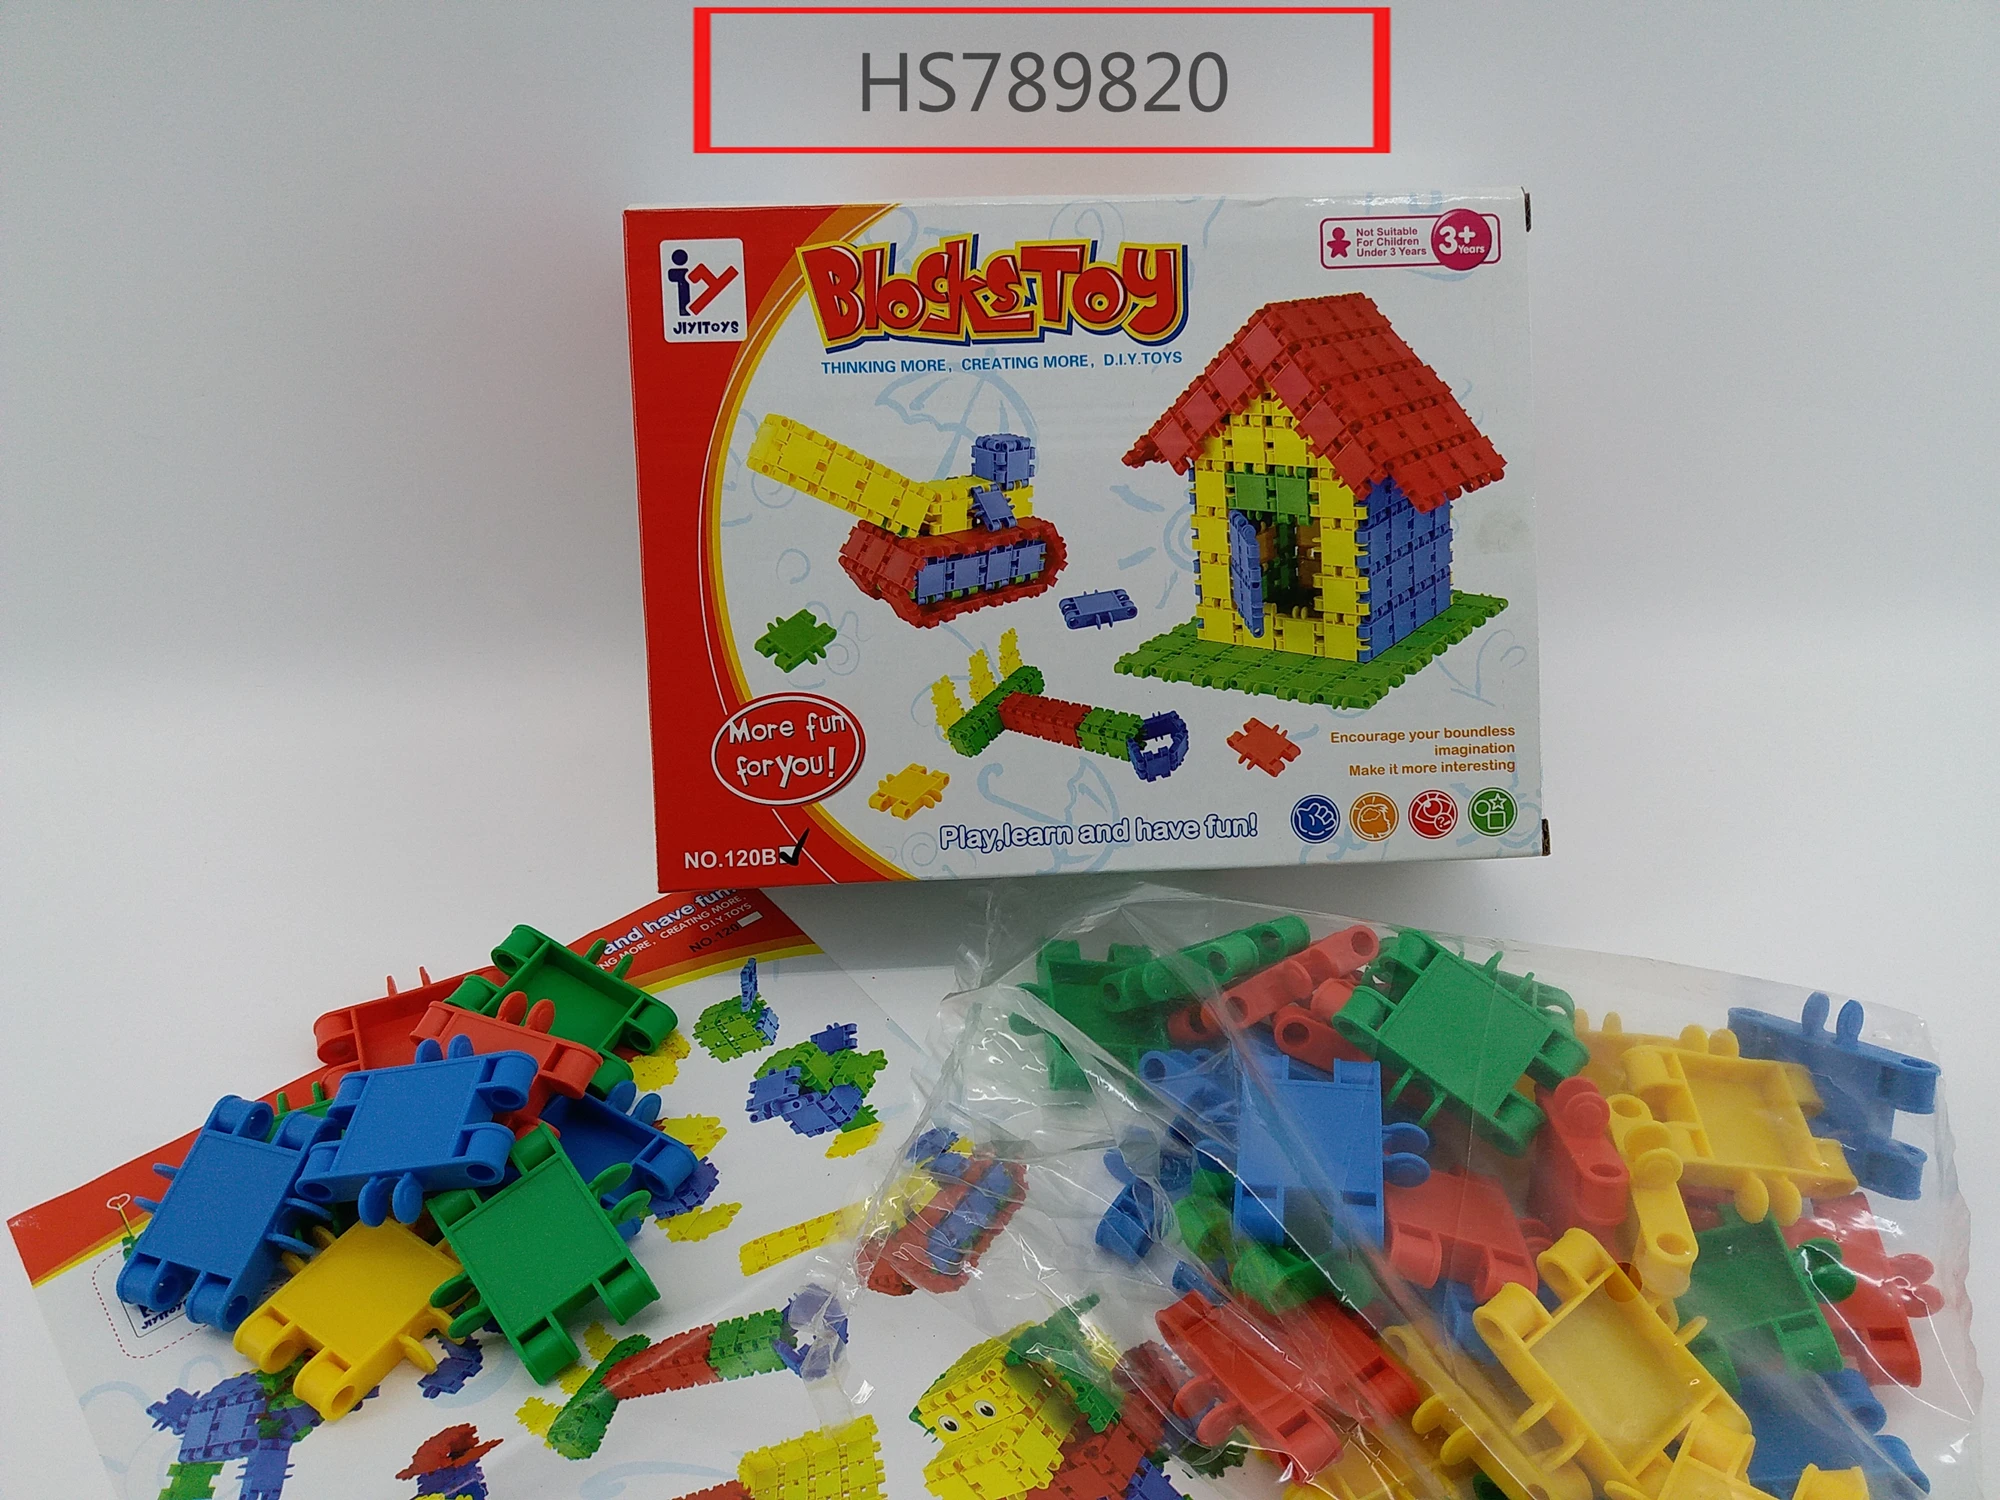 HS789820, Huwsin Toys, Educational Toy, Building block,40pcs